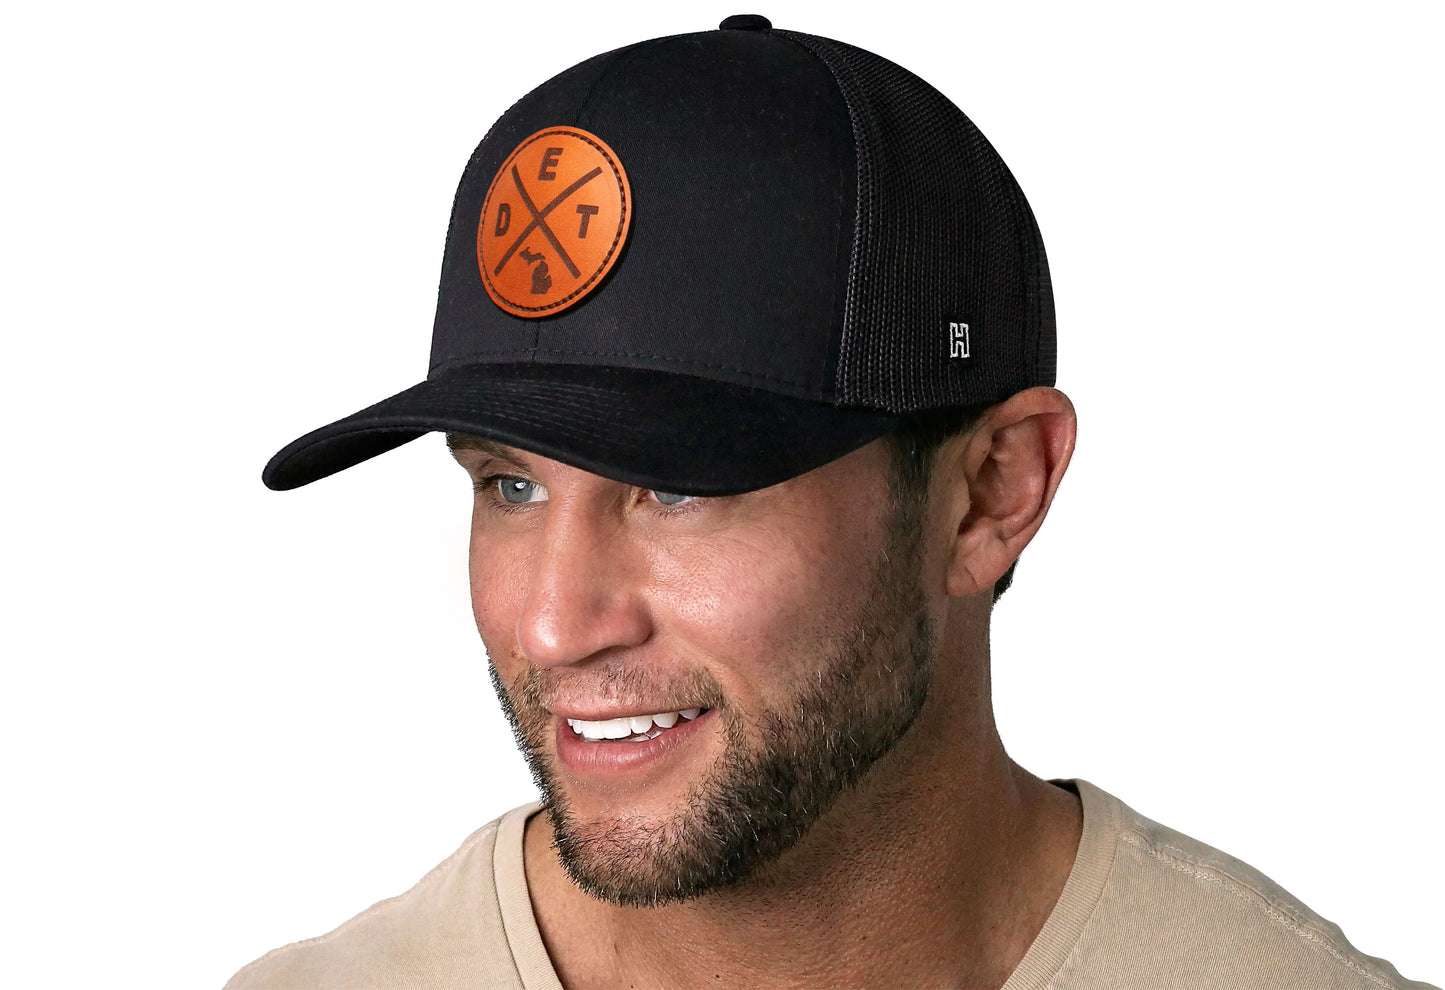 Detroit Trucker Hat Leather  |  Black DET Snapback